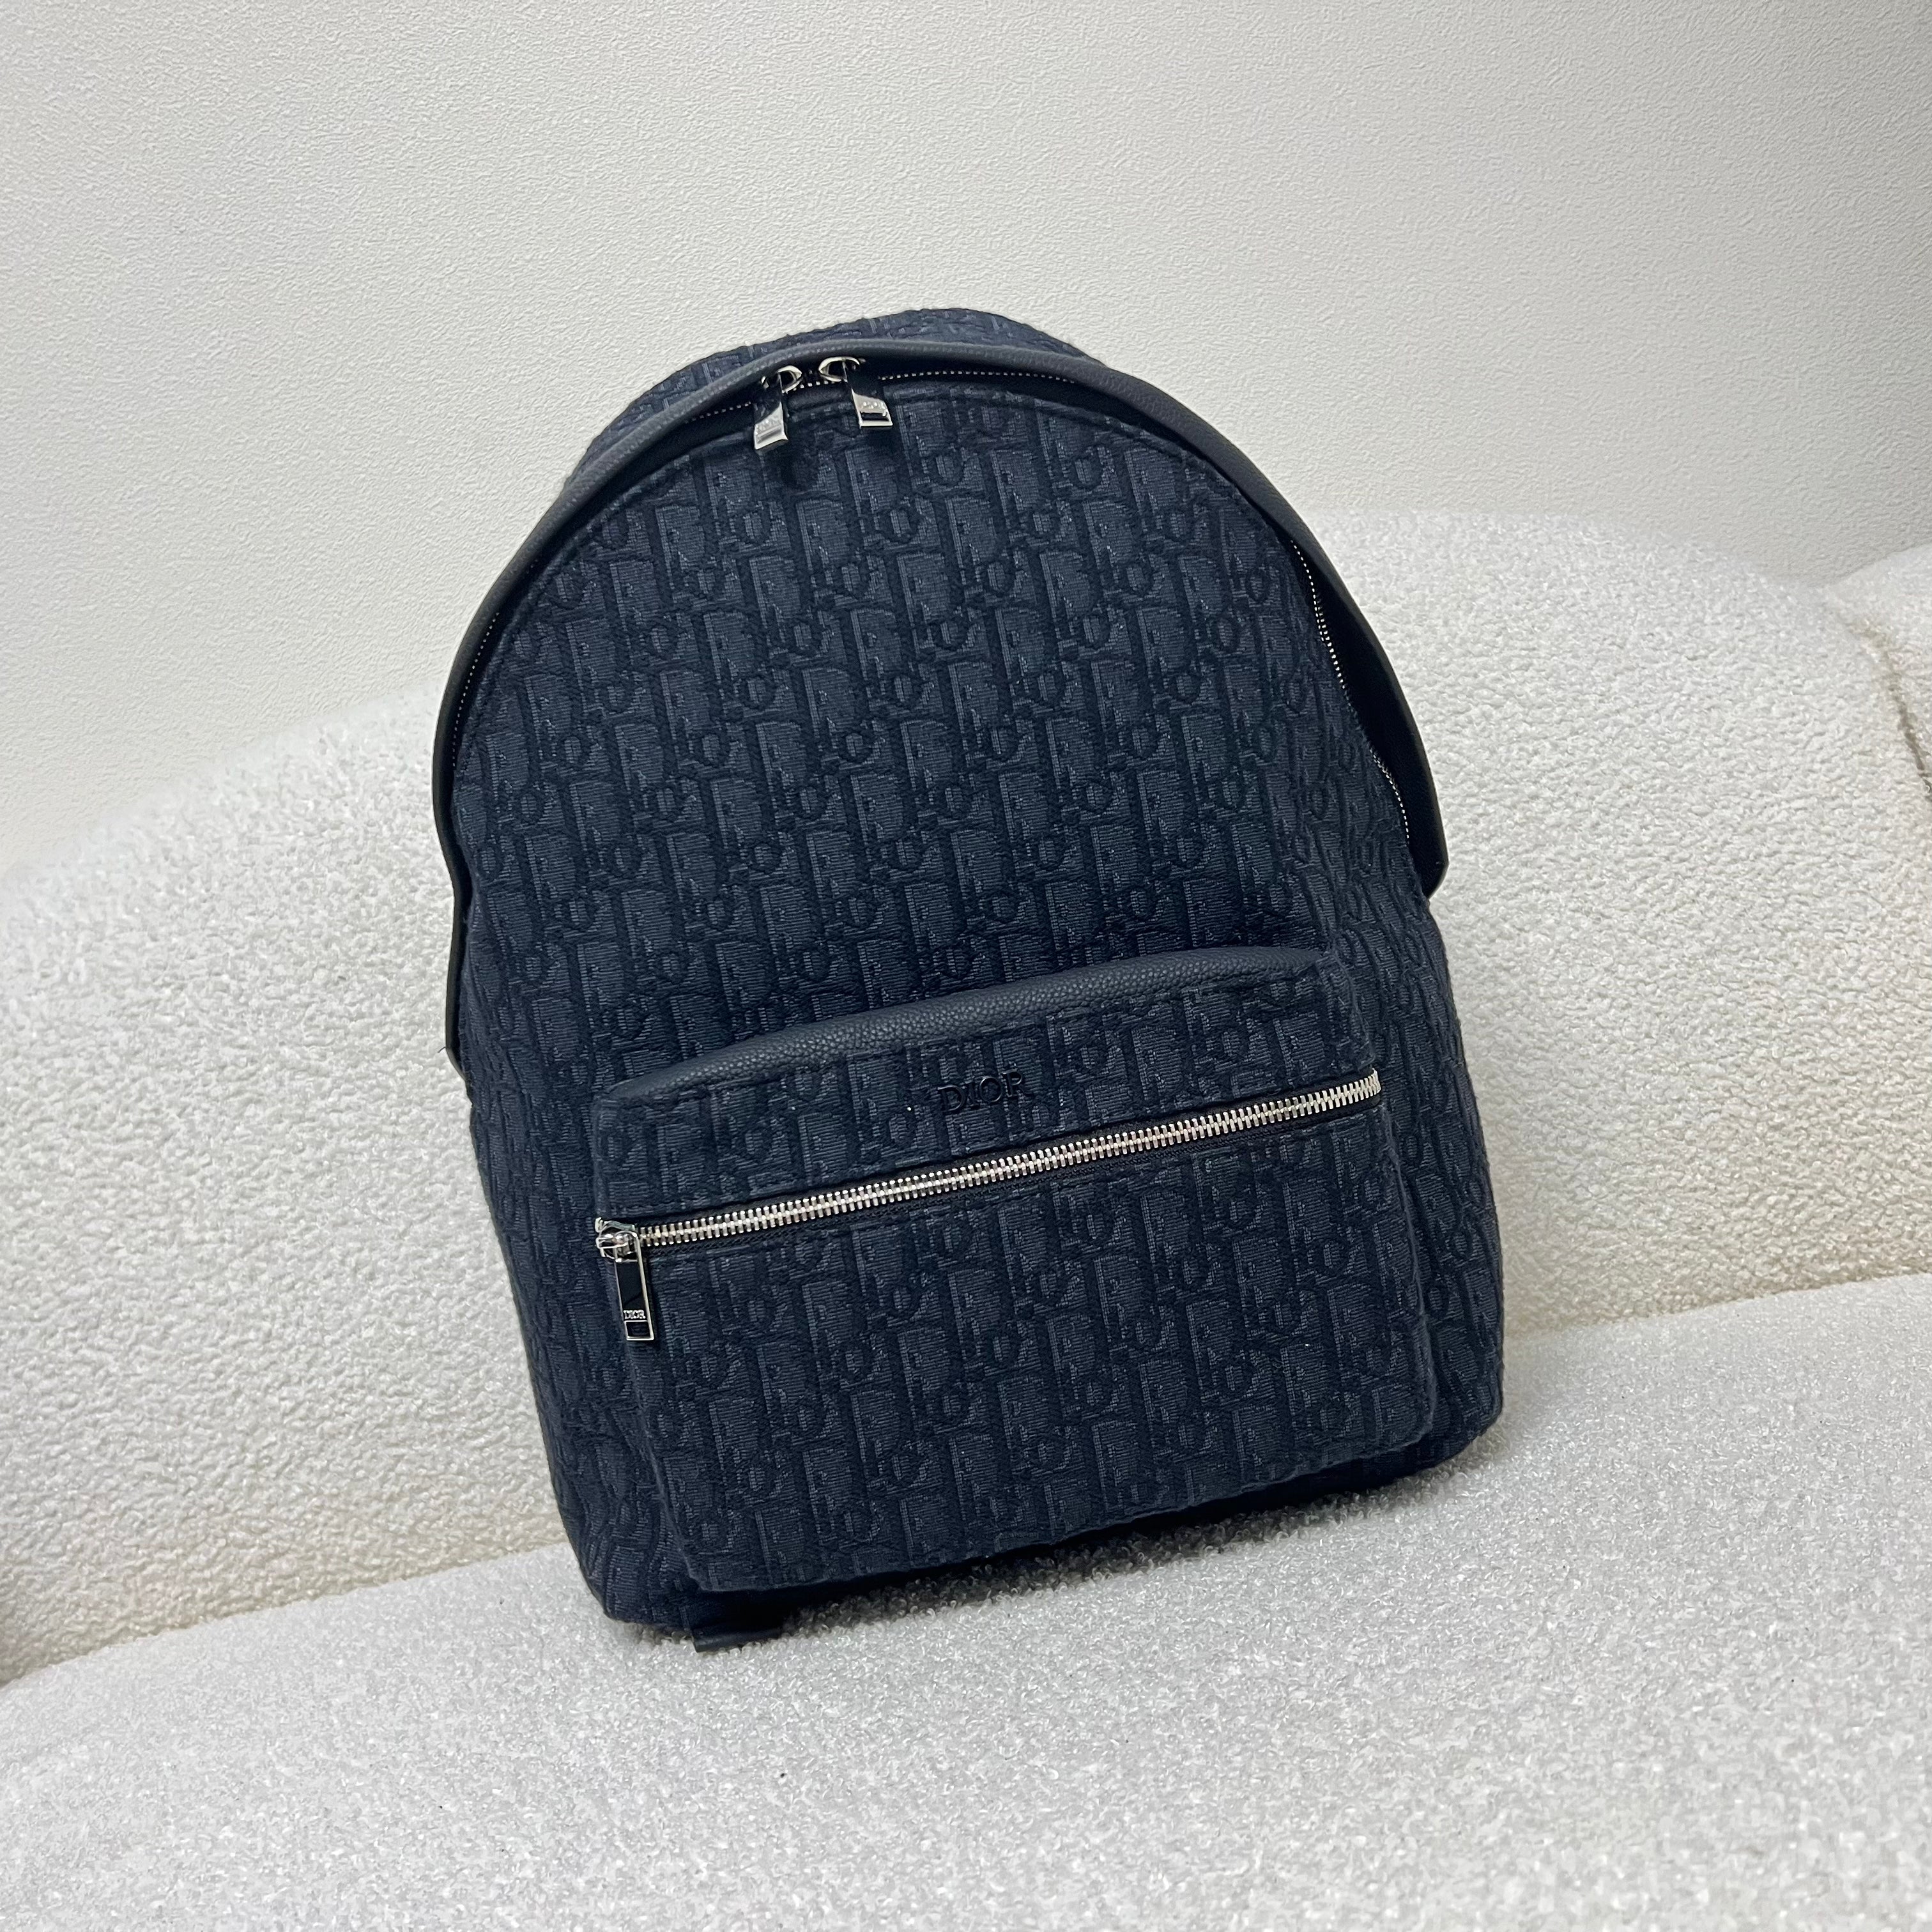 Blue and Black grey Bag